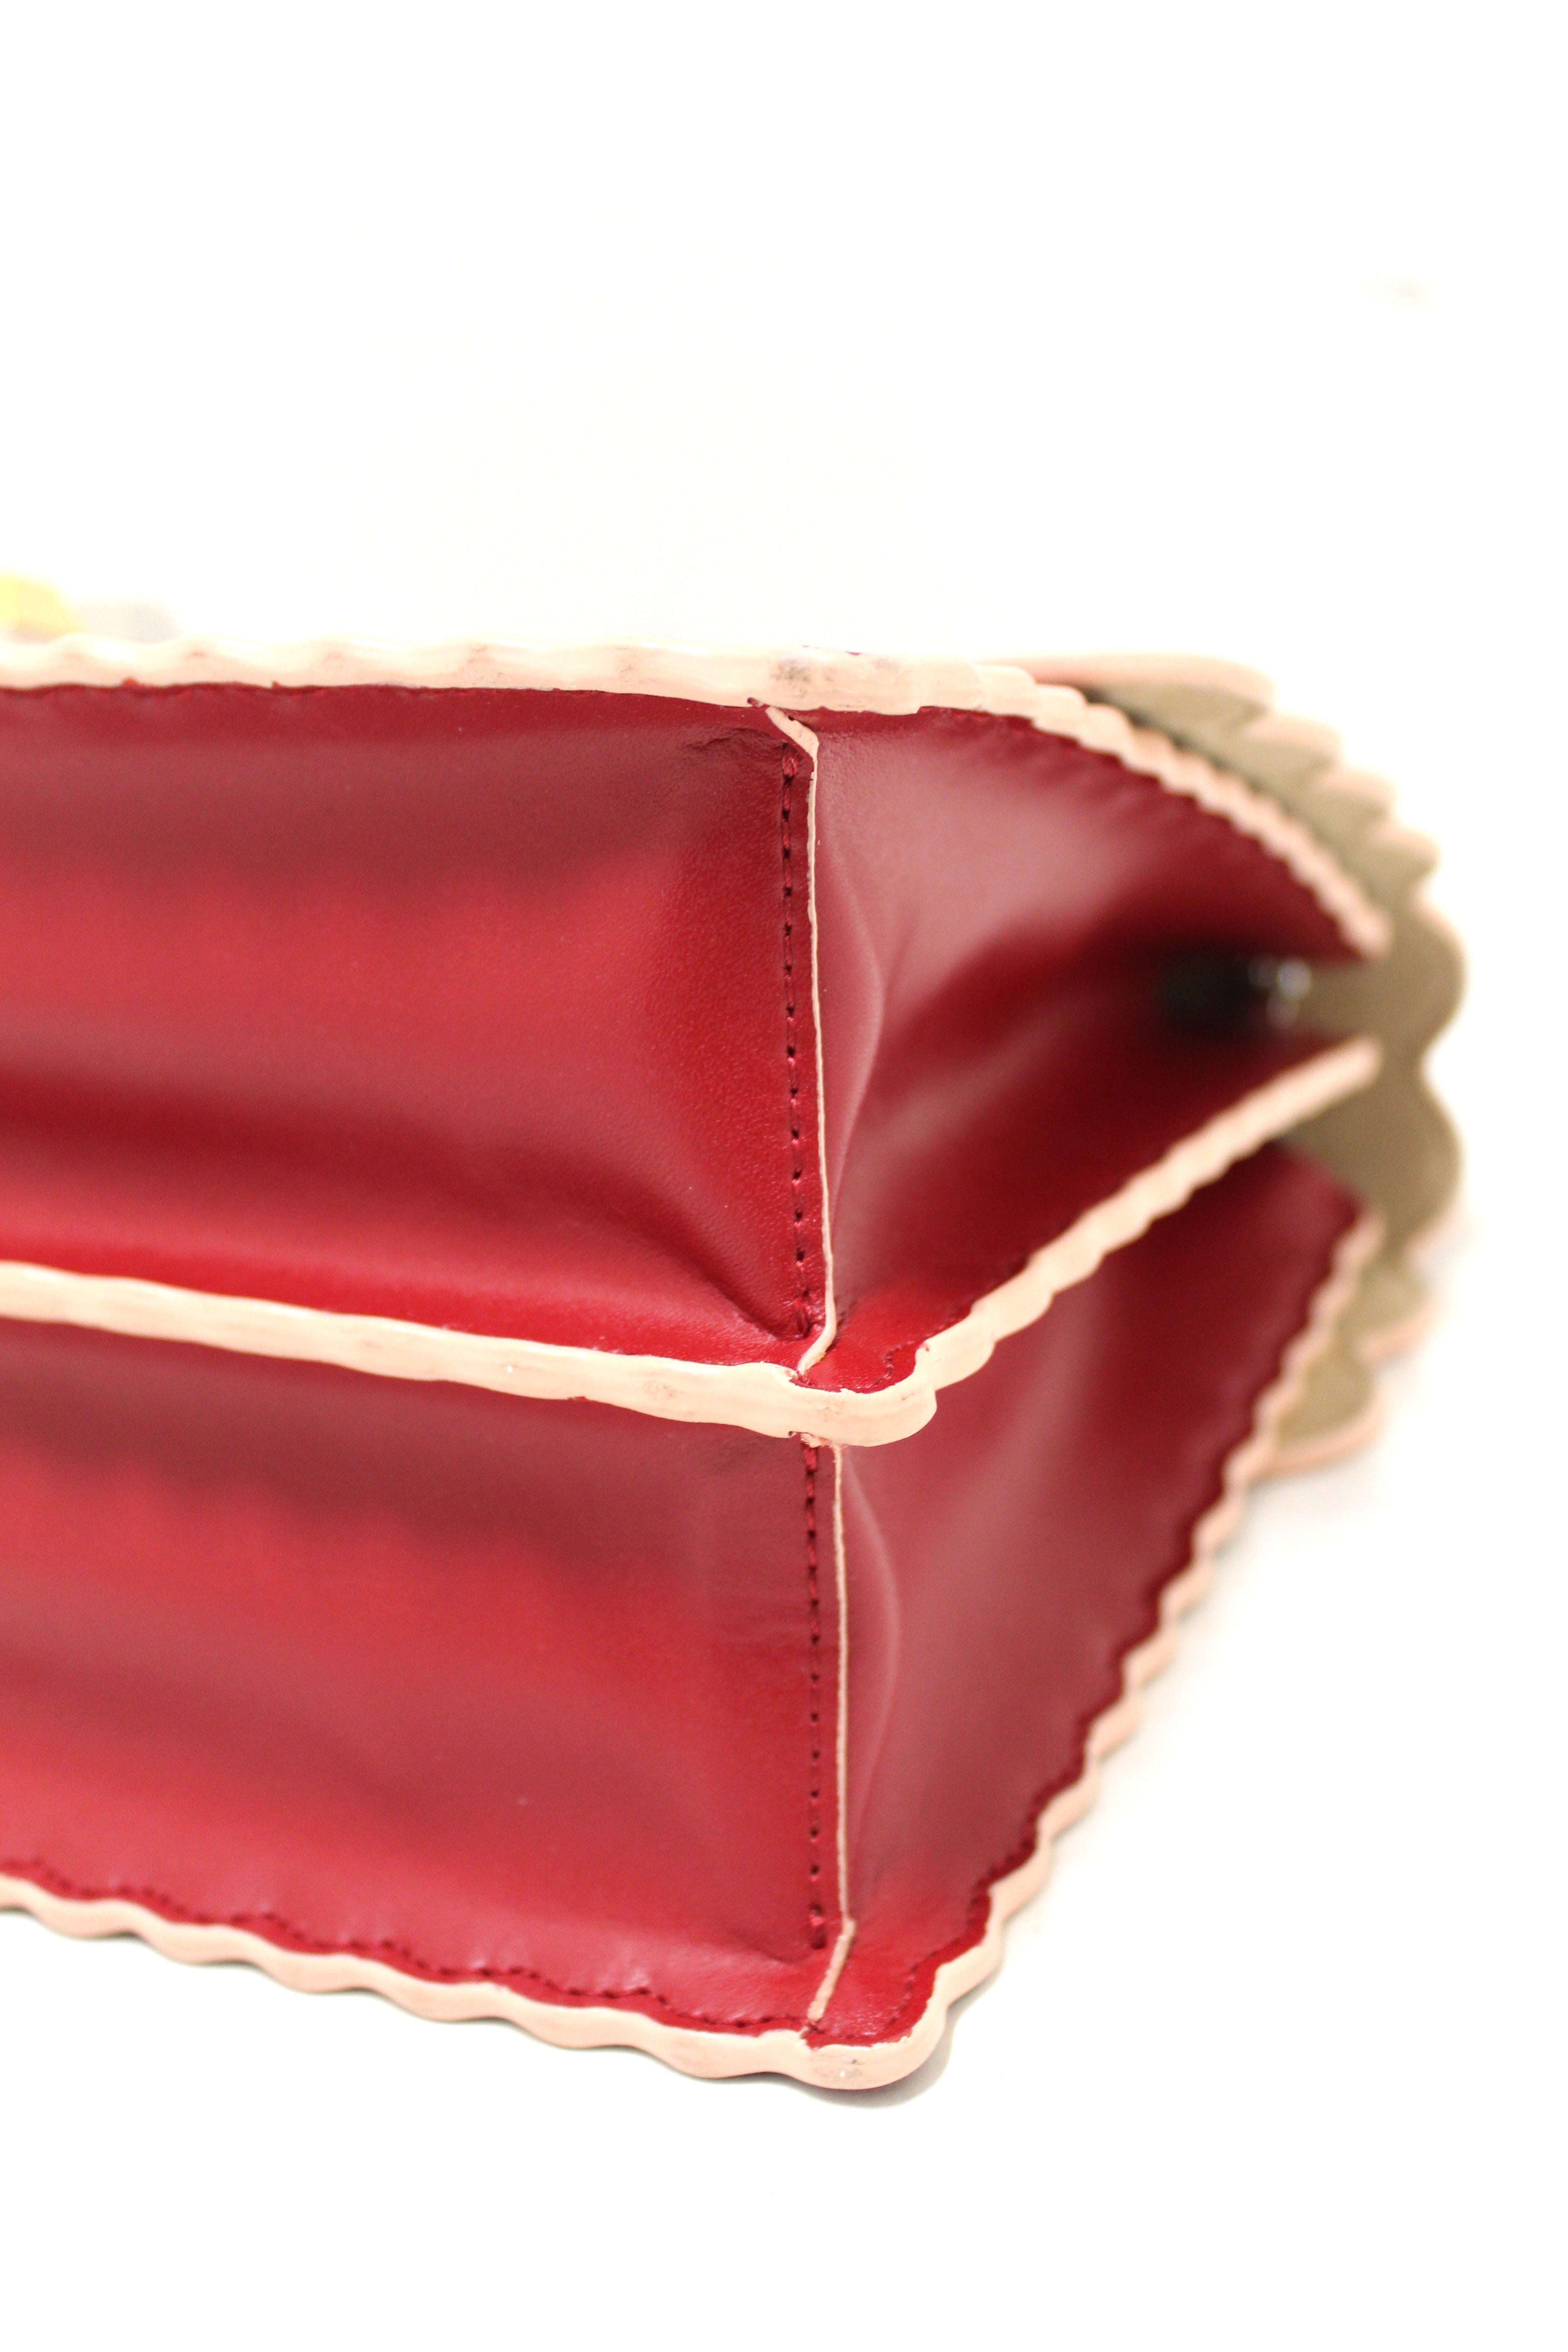 Authentic Fendi Red Leather Mini I Kan Chain Shoulder Bag